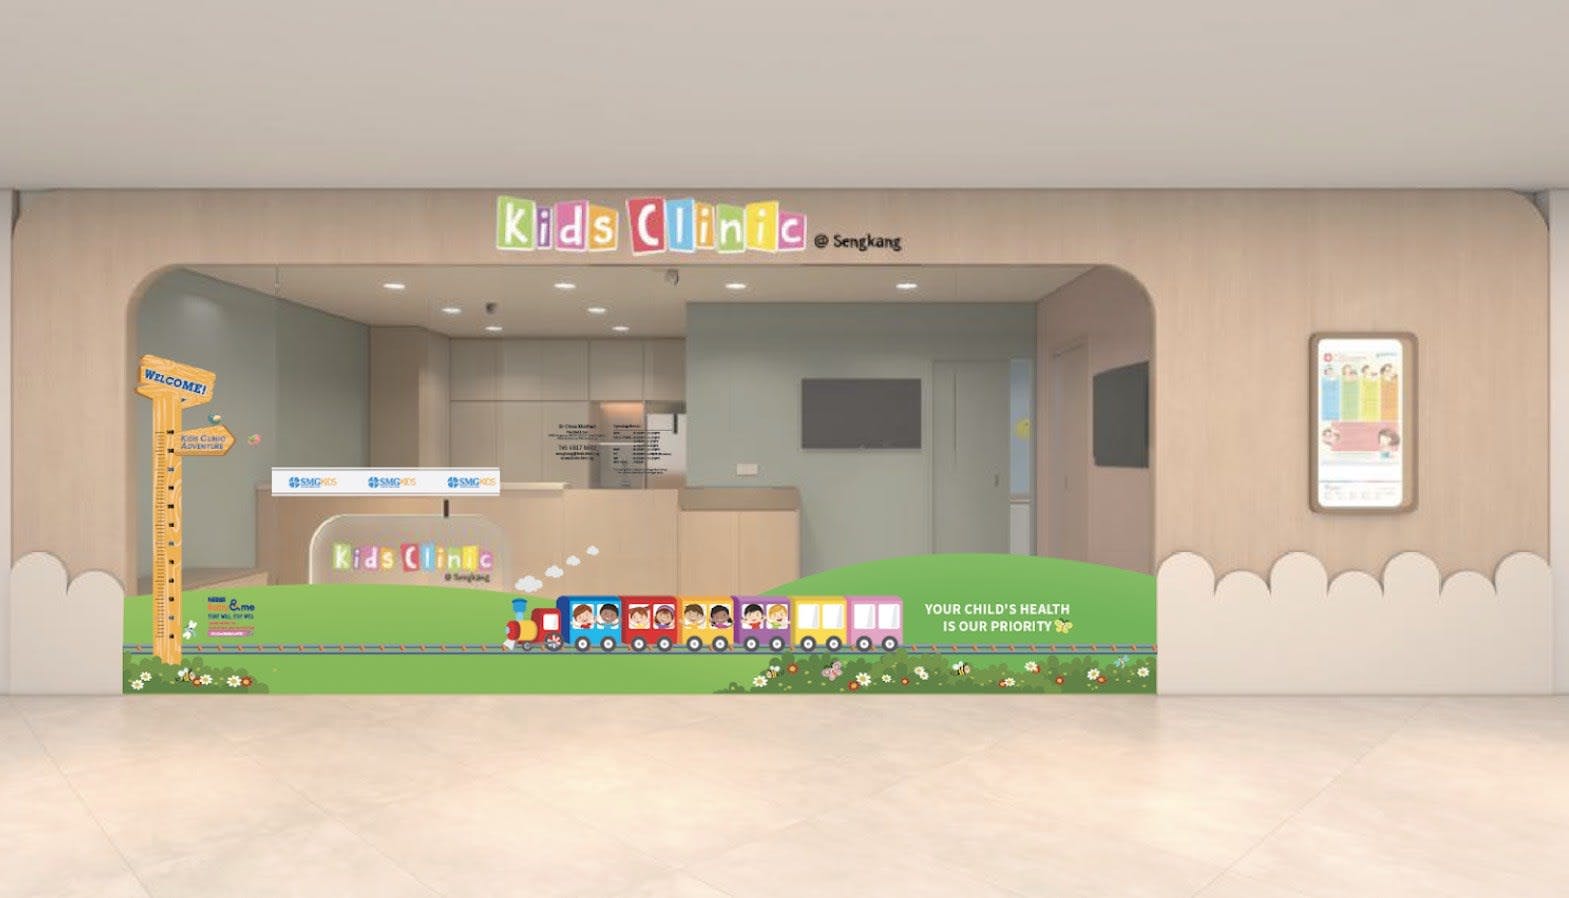 Kids Clinic @ Sengkang by SMG